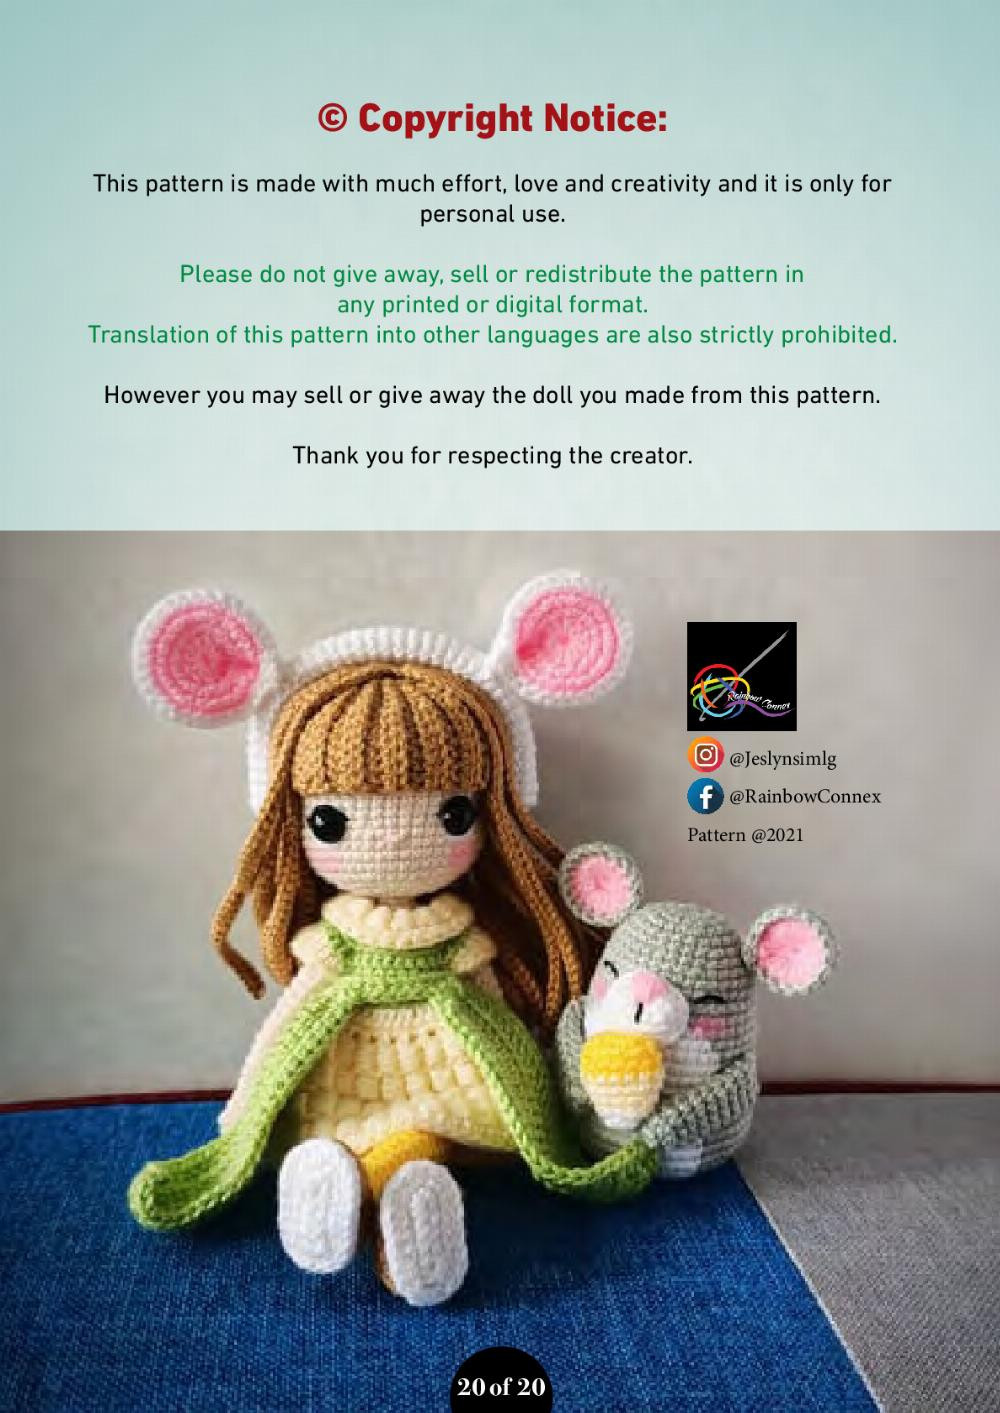 Maisie 美希 (crochet pattern)